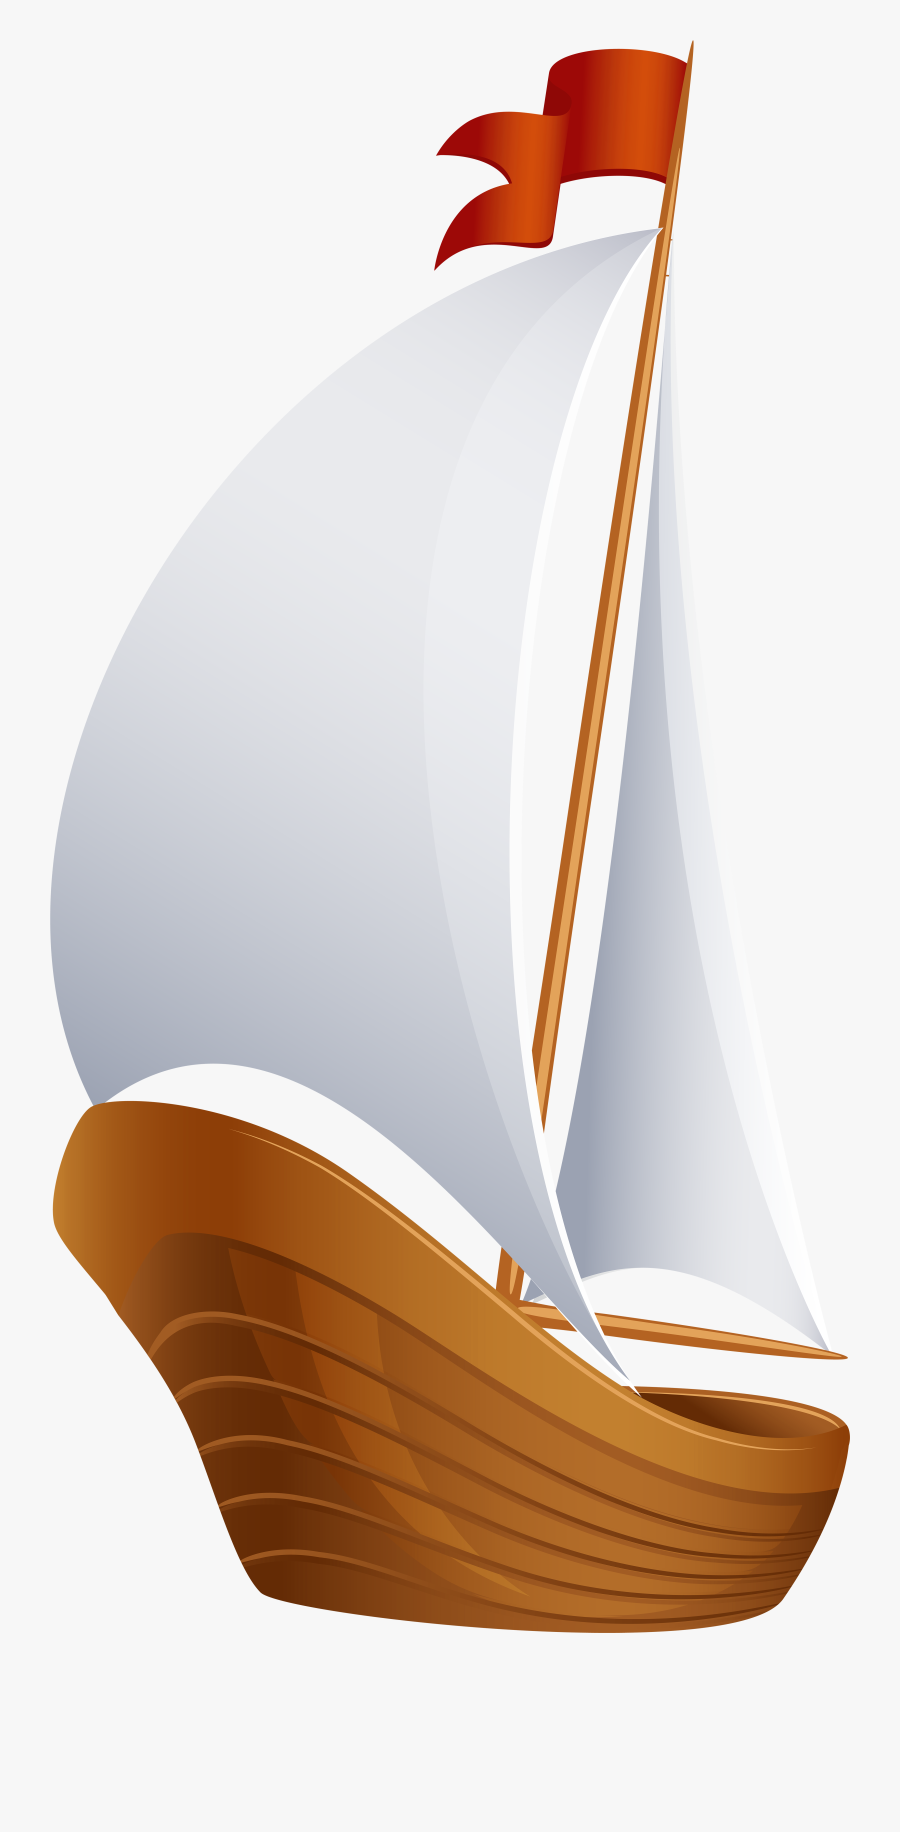 Sailboat Transparent For Free - Sailboat Clipart Transparent, Transparent Clipart